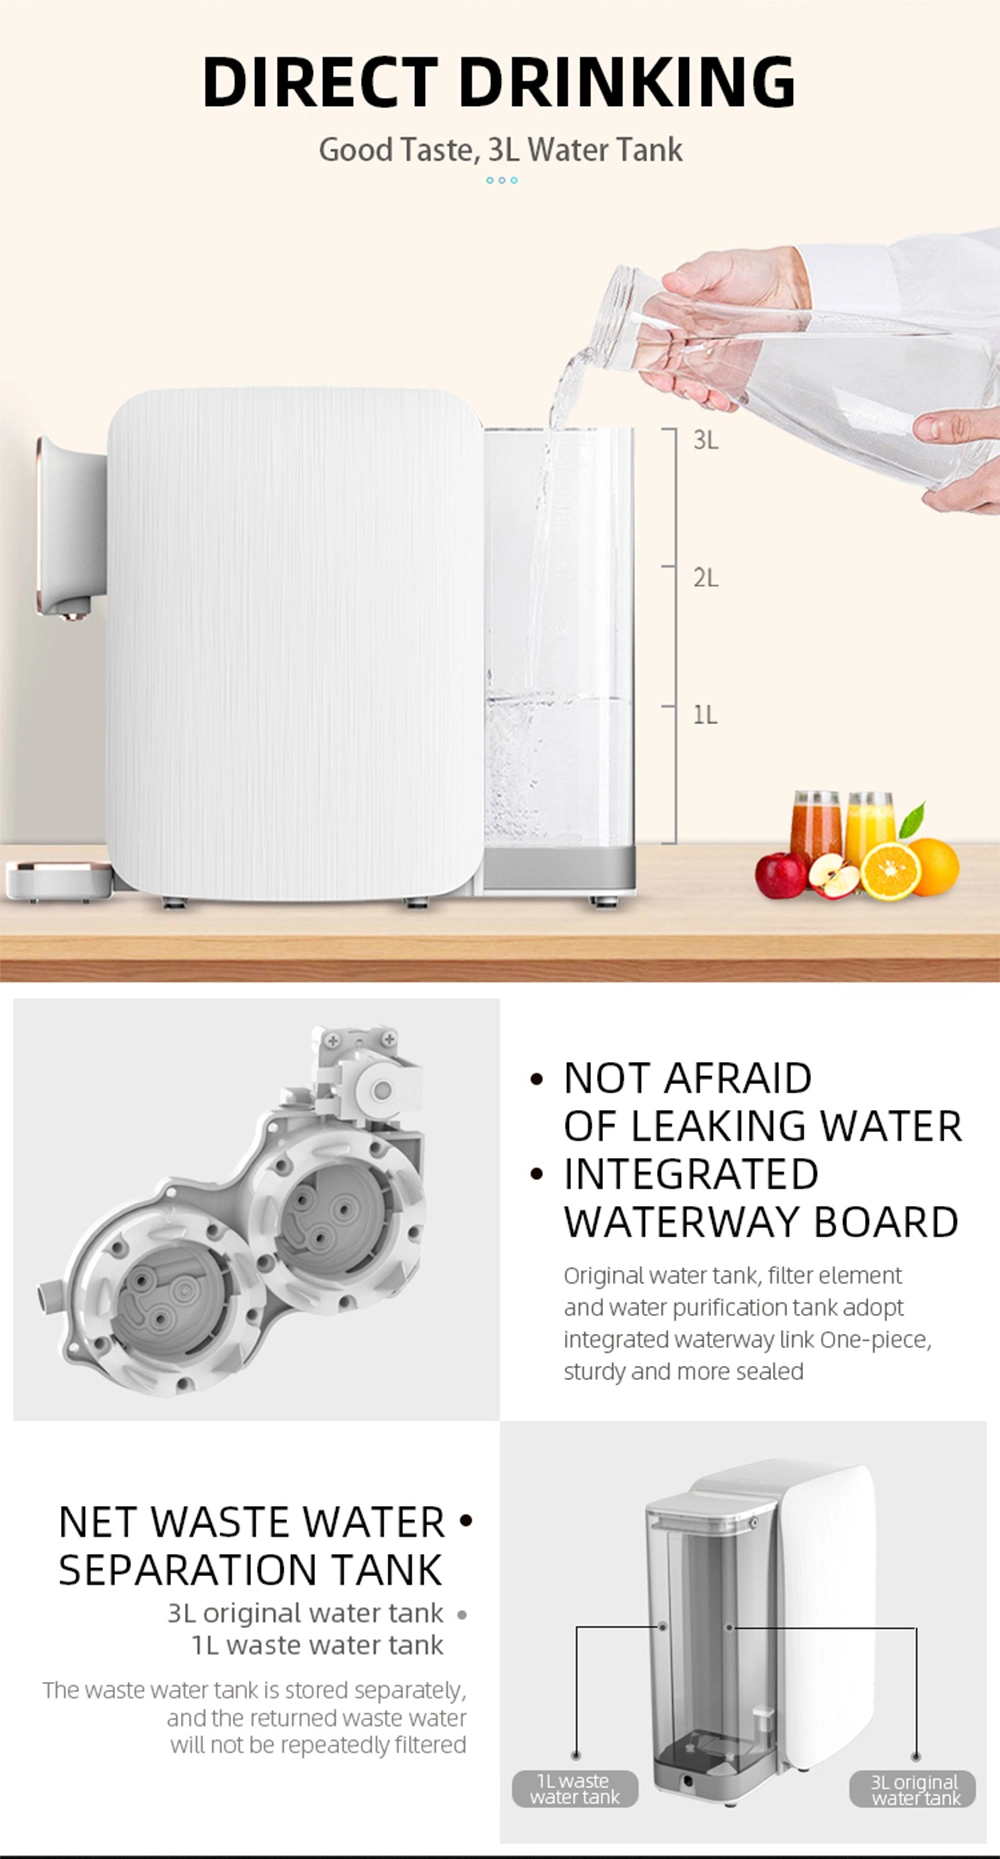 Free Installation Instant Hot Water Countertop Reverse Osmosis Machine Desktop Hot Water Dispenser Home